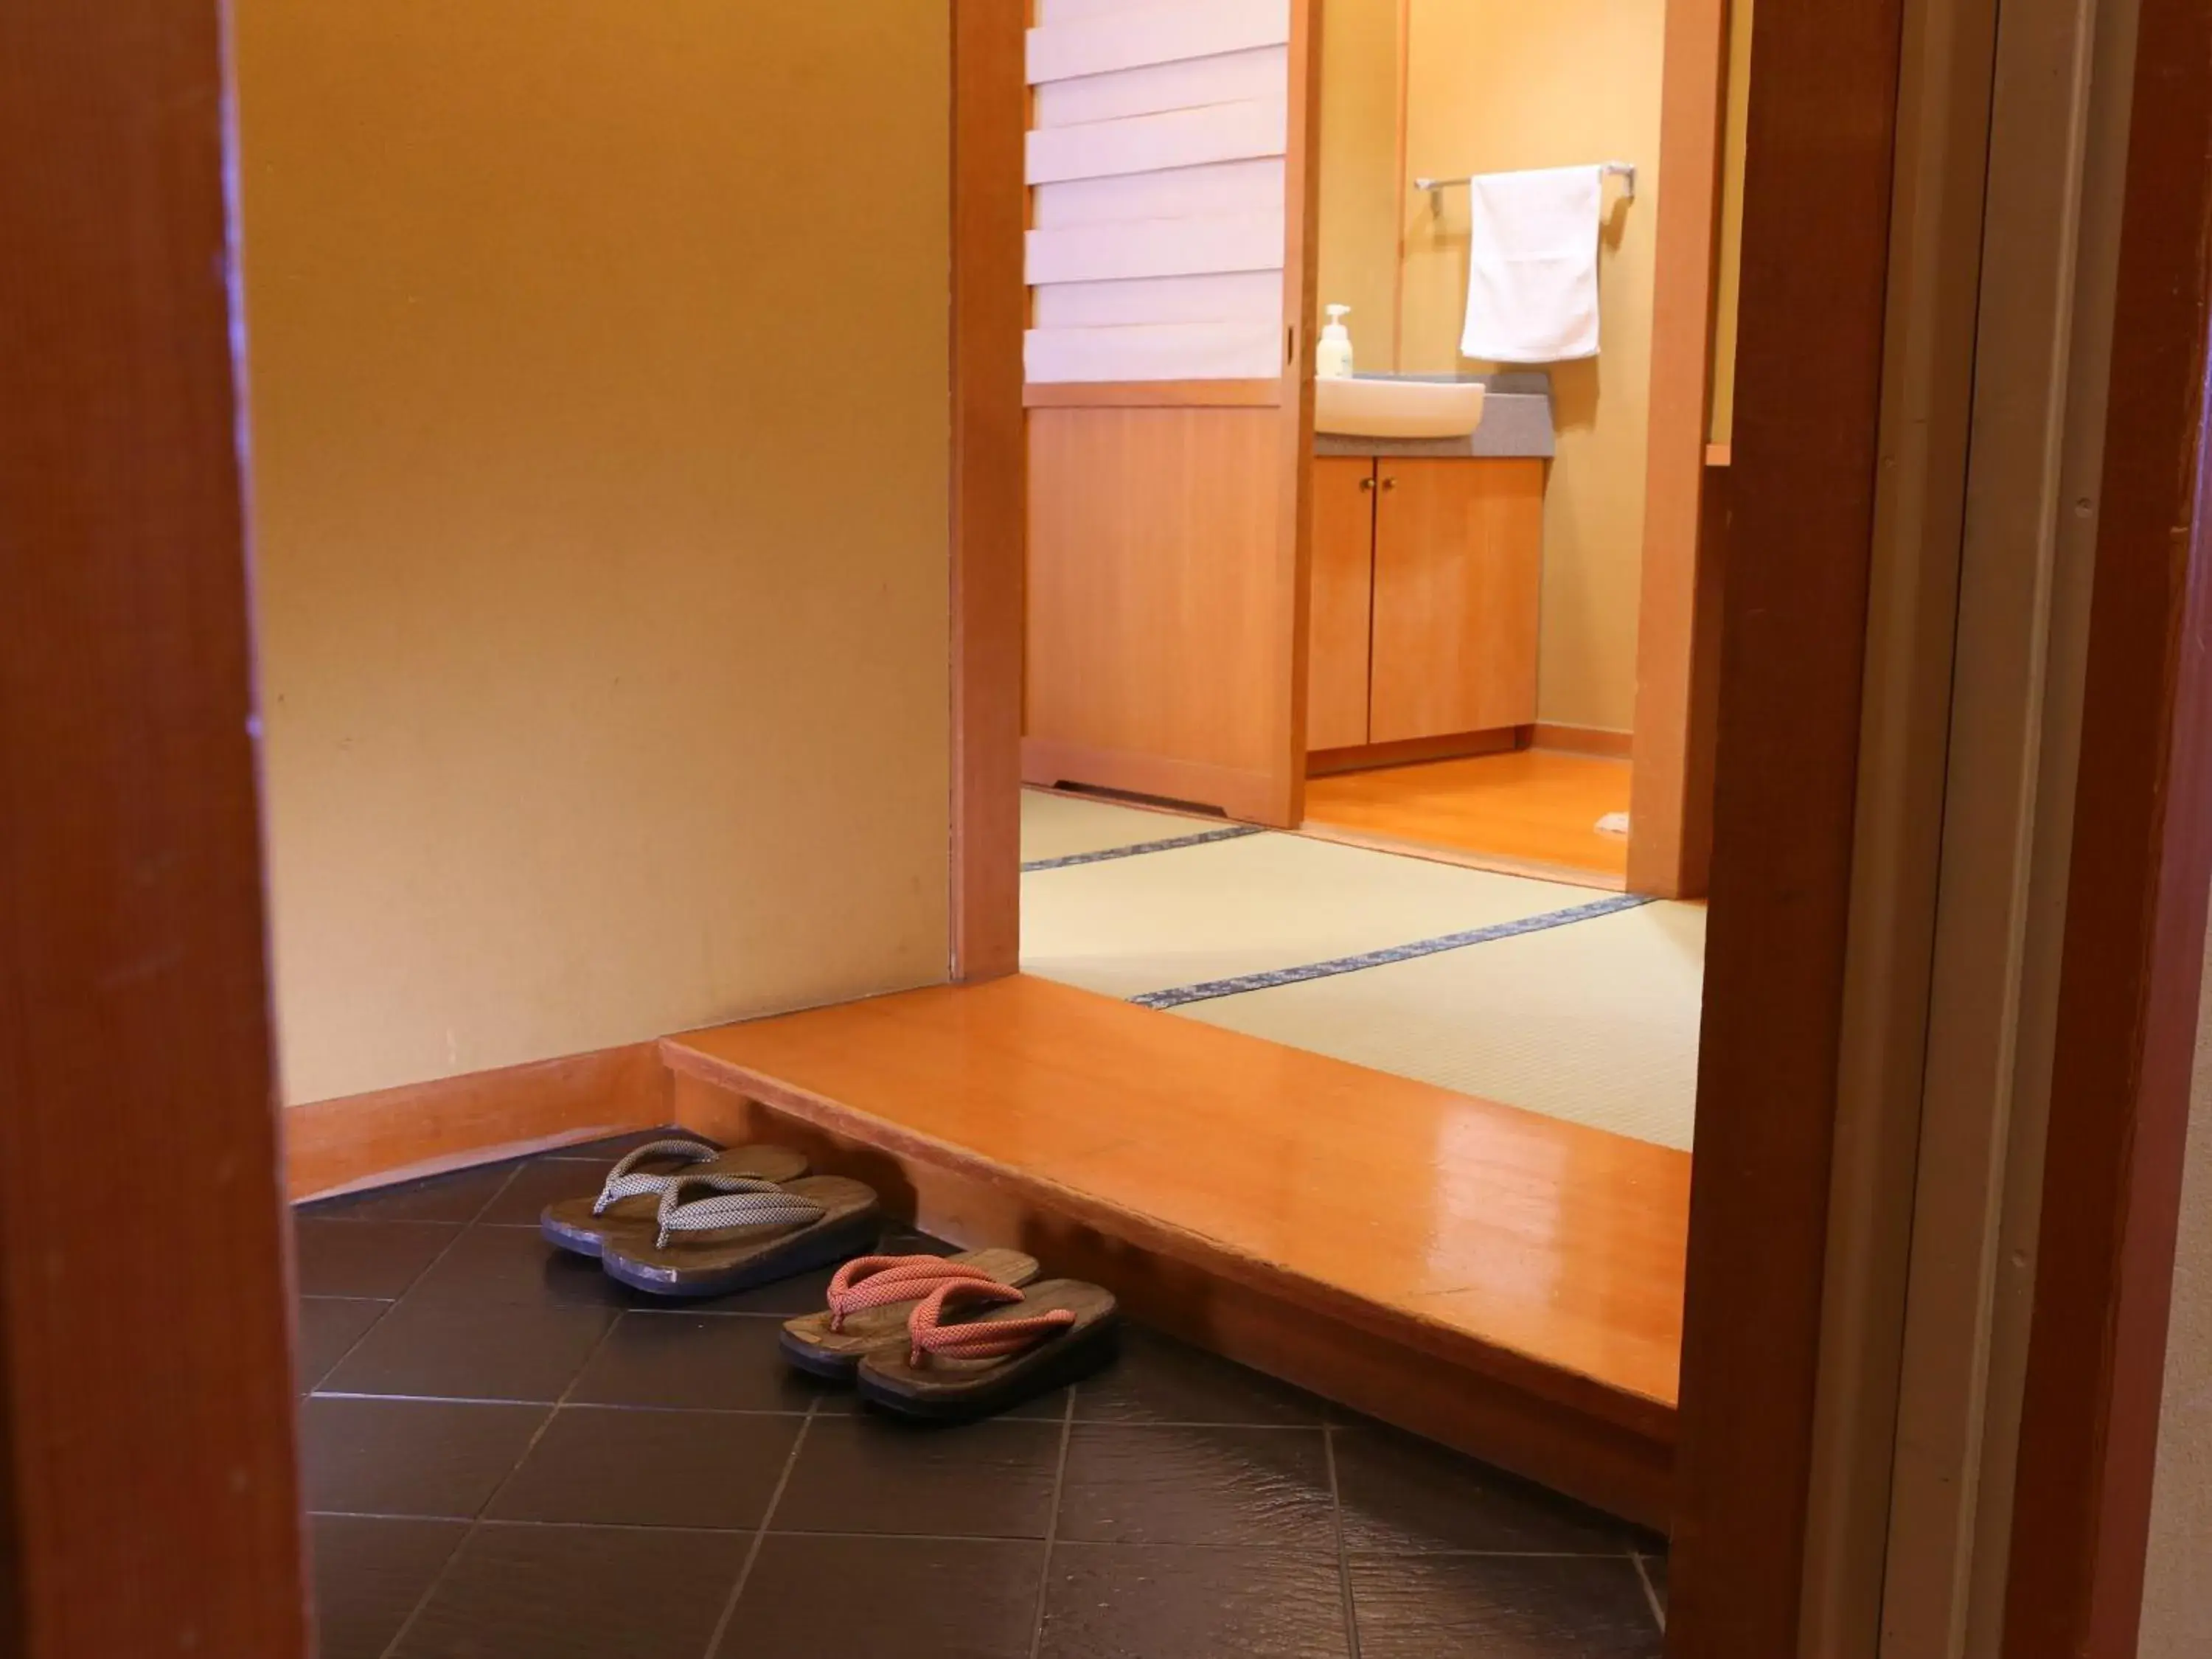 Photo of the whole room, Bathroom in Hotel Tamanoyu